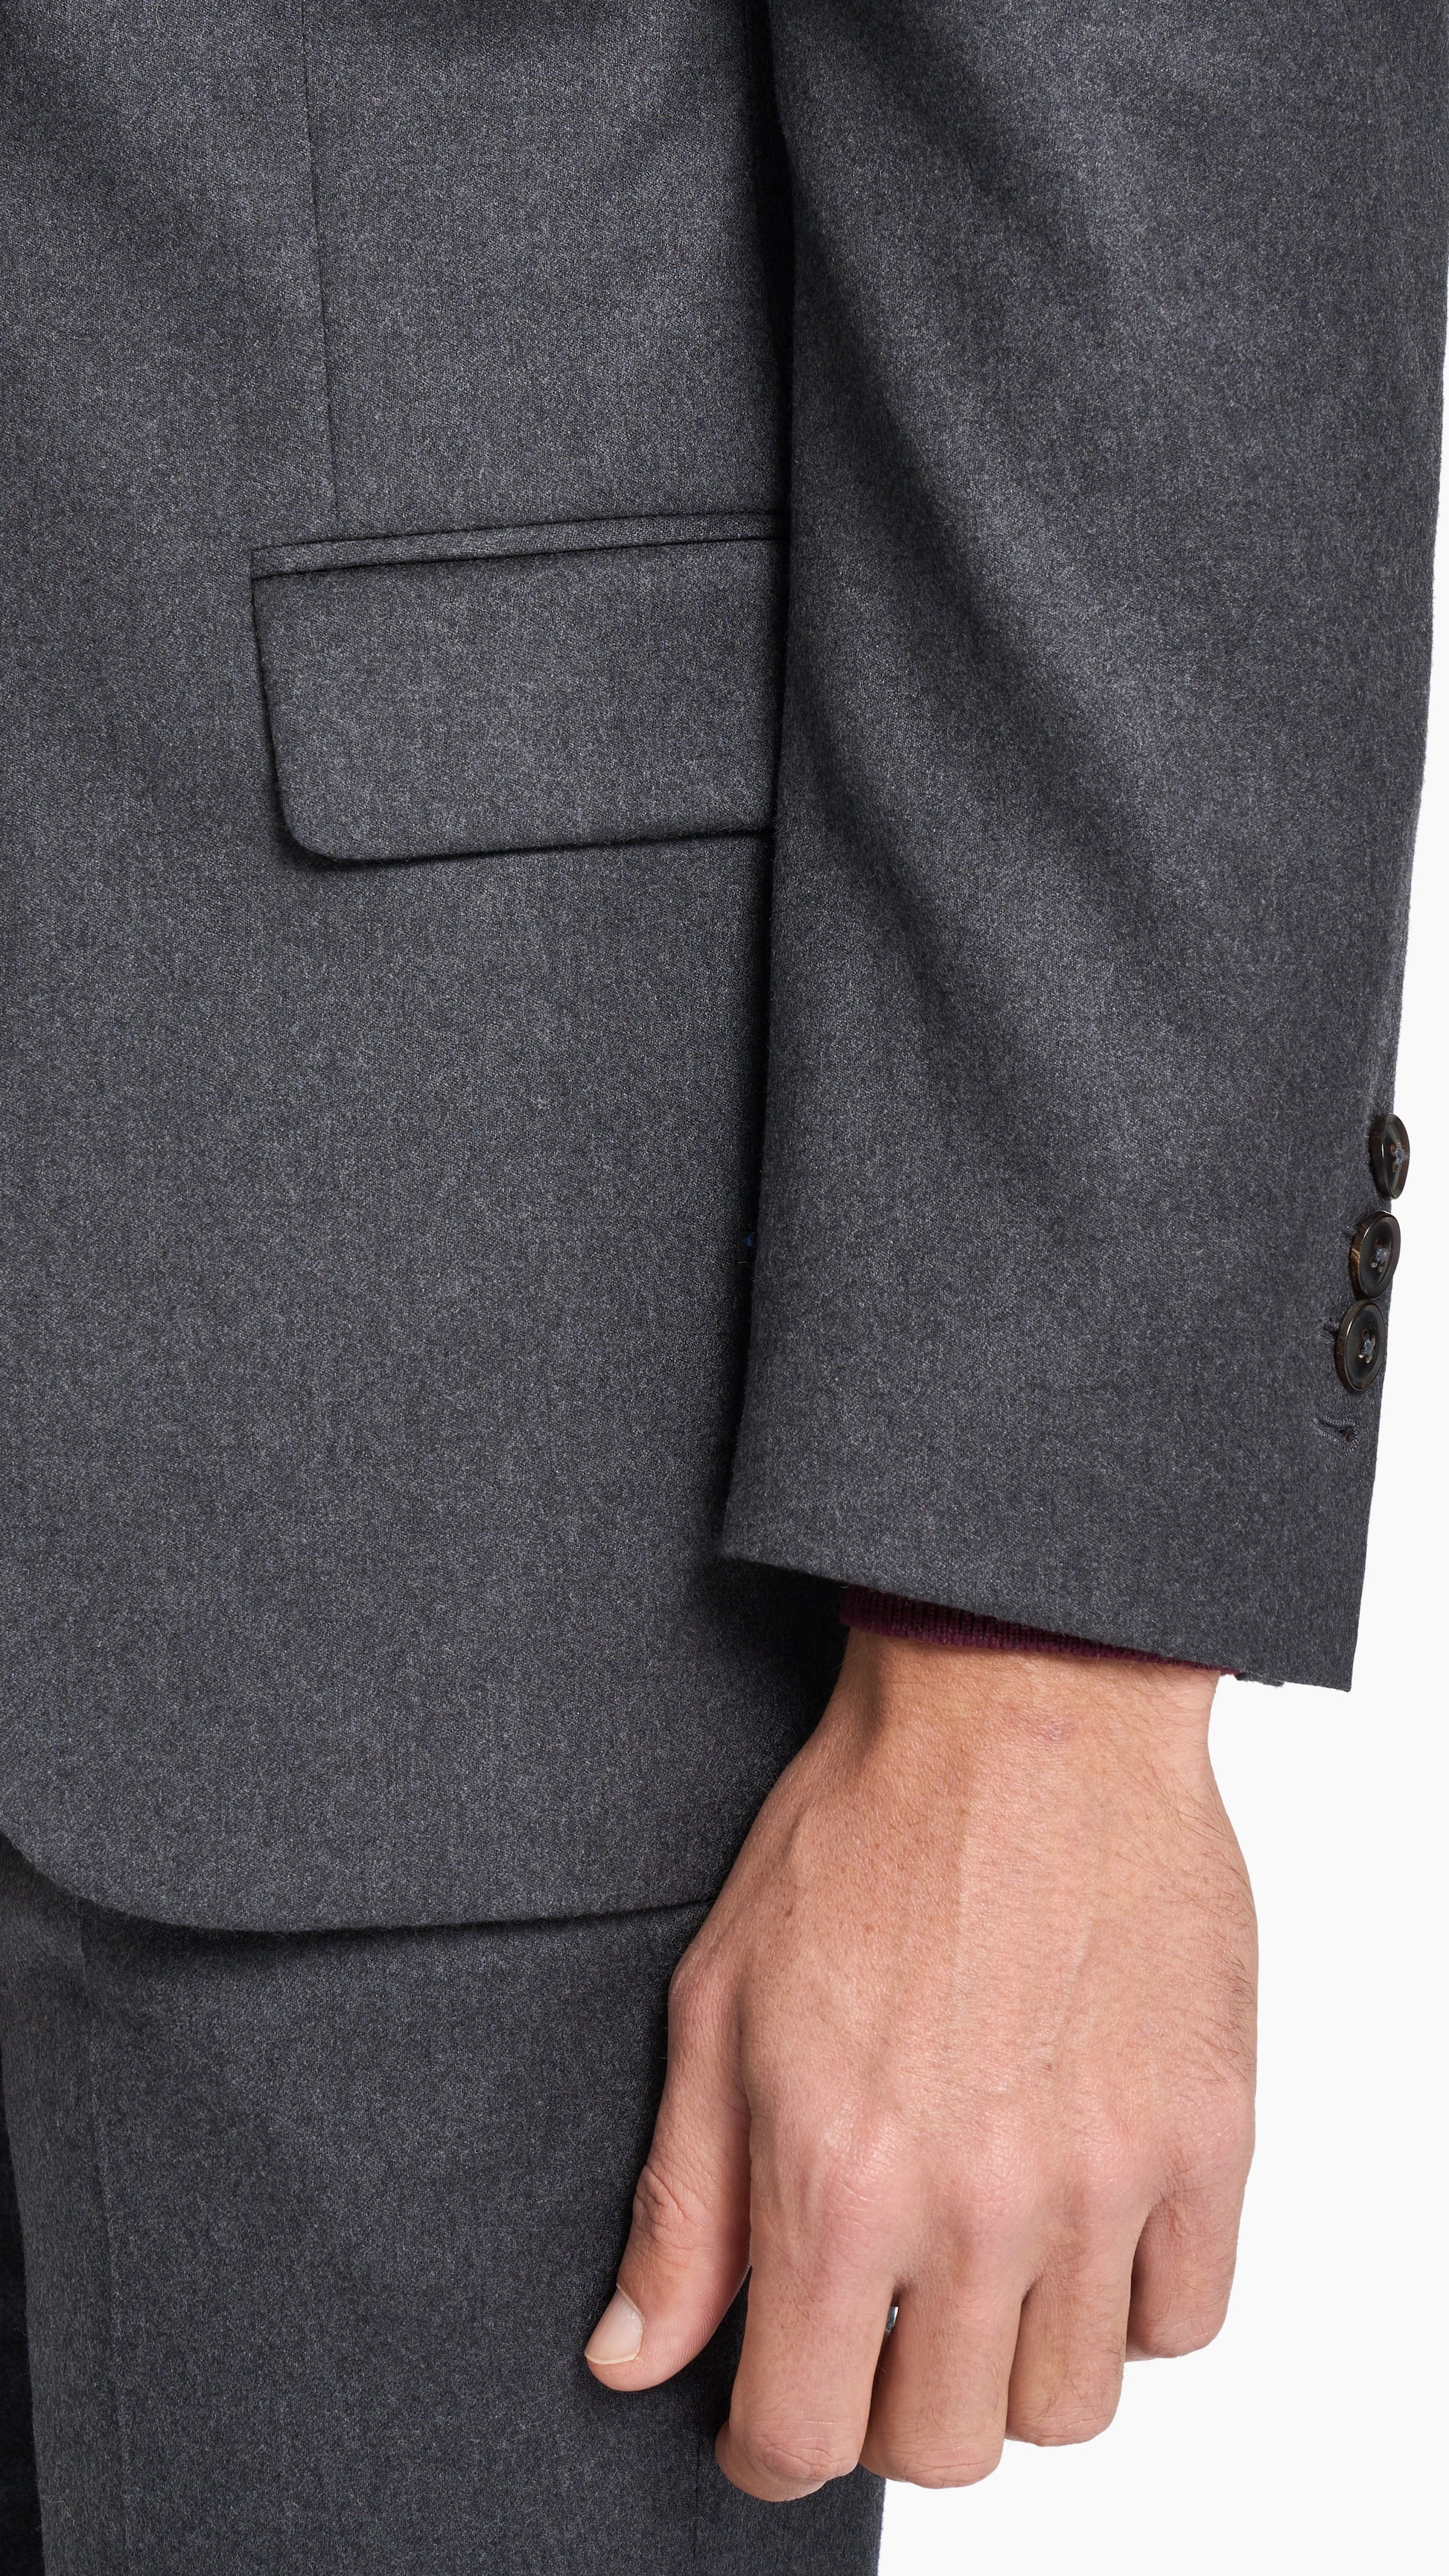 Charcoal Grey Flannel Jacket